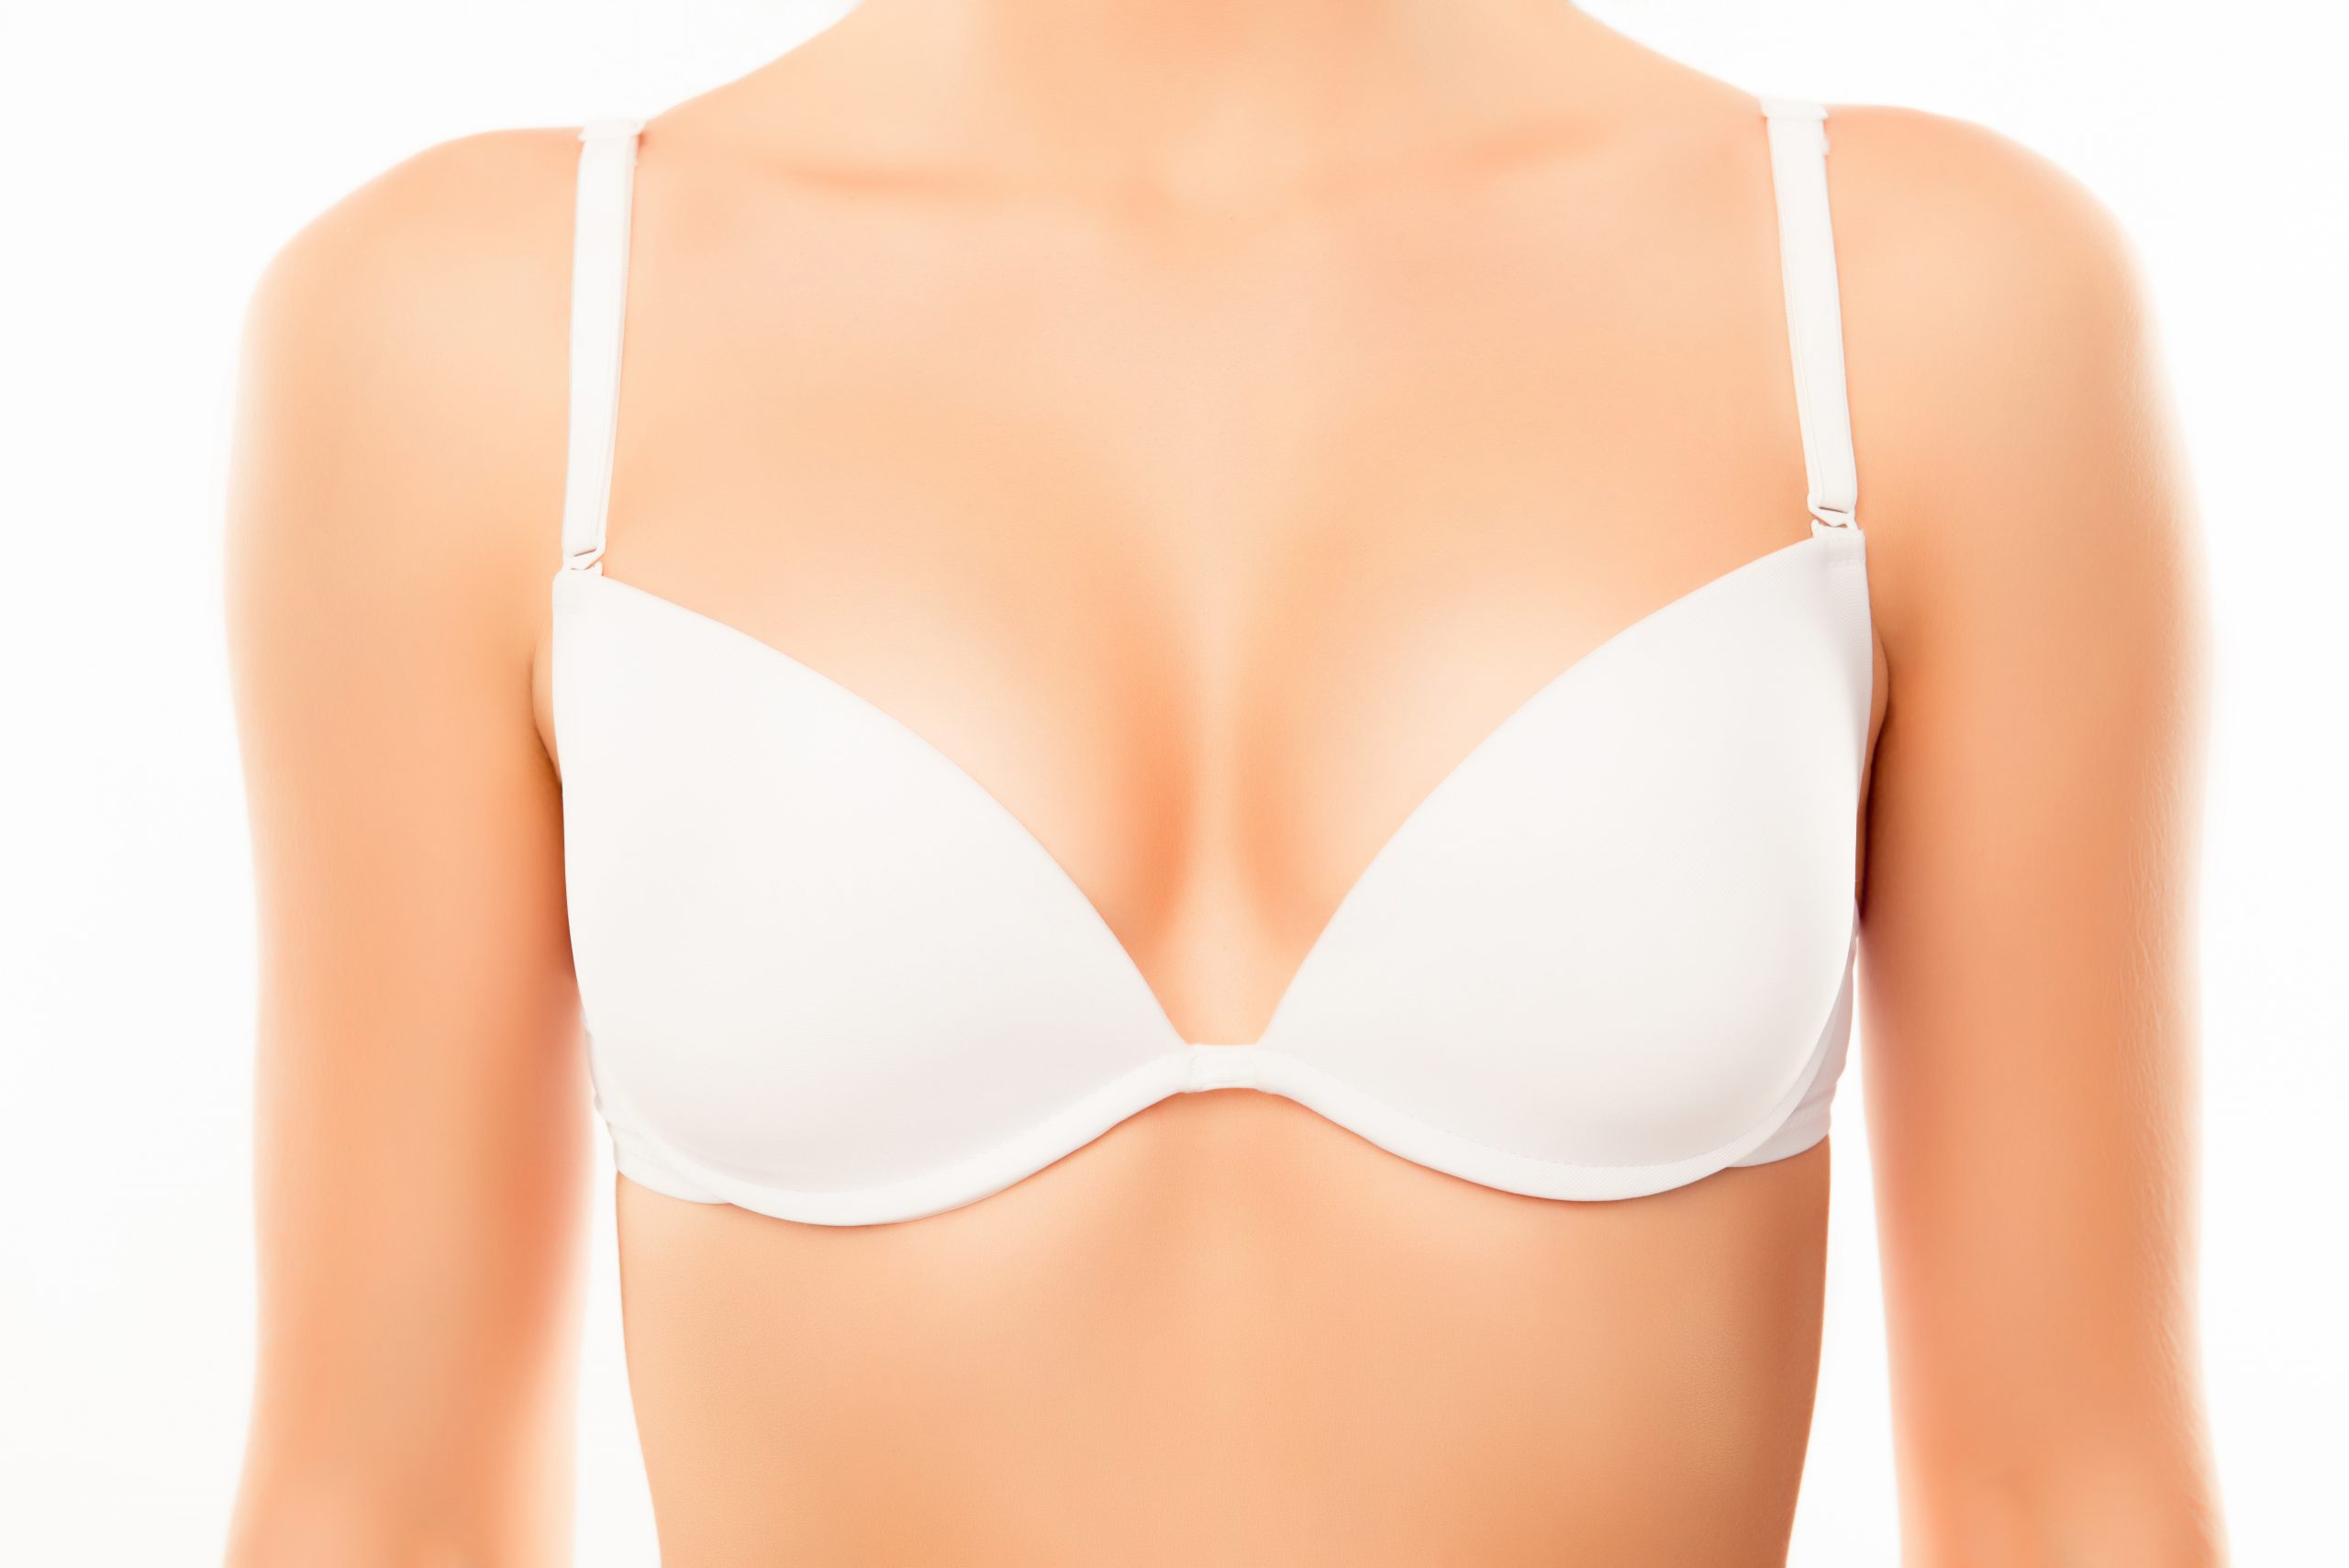 Can A Breast Augmentation Fix Sagging Breasts?